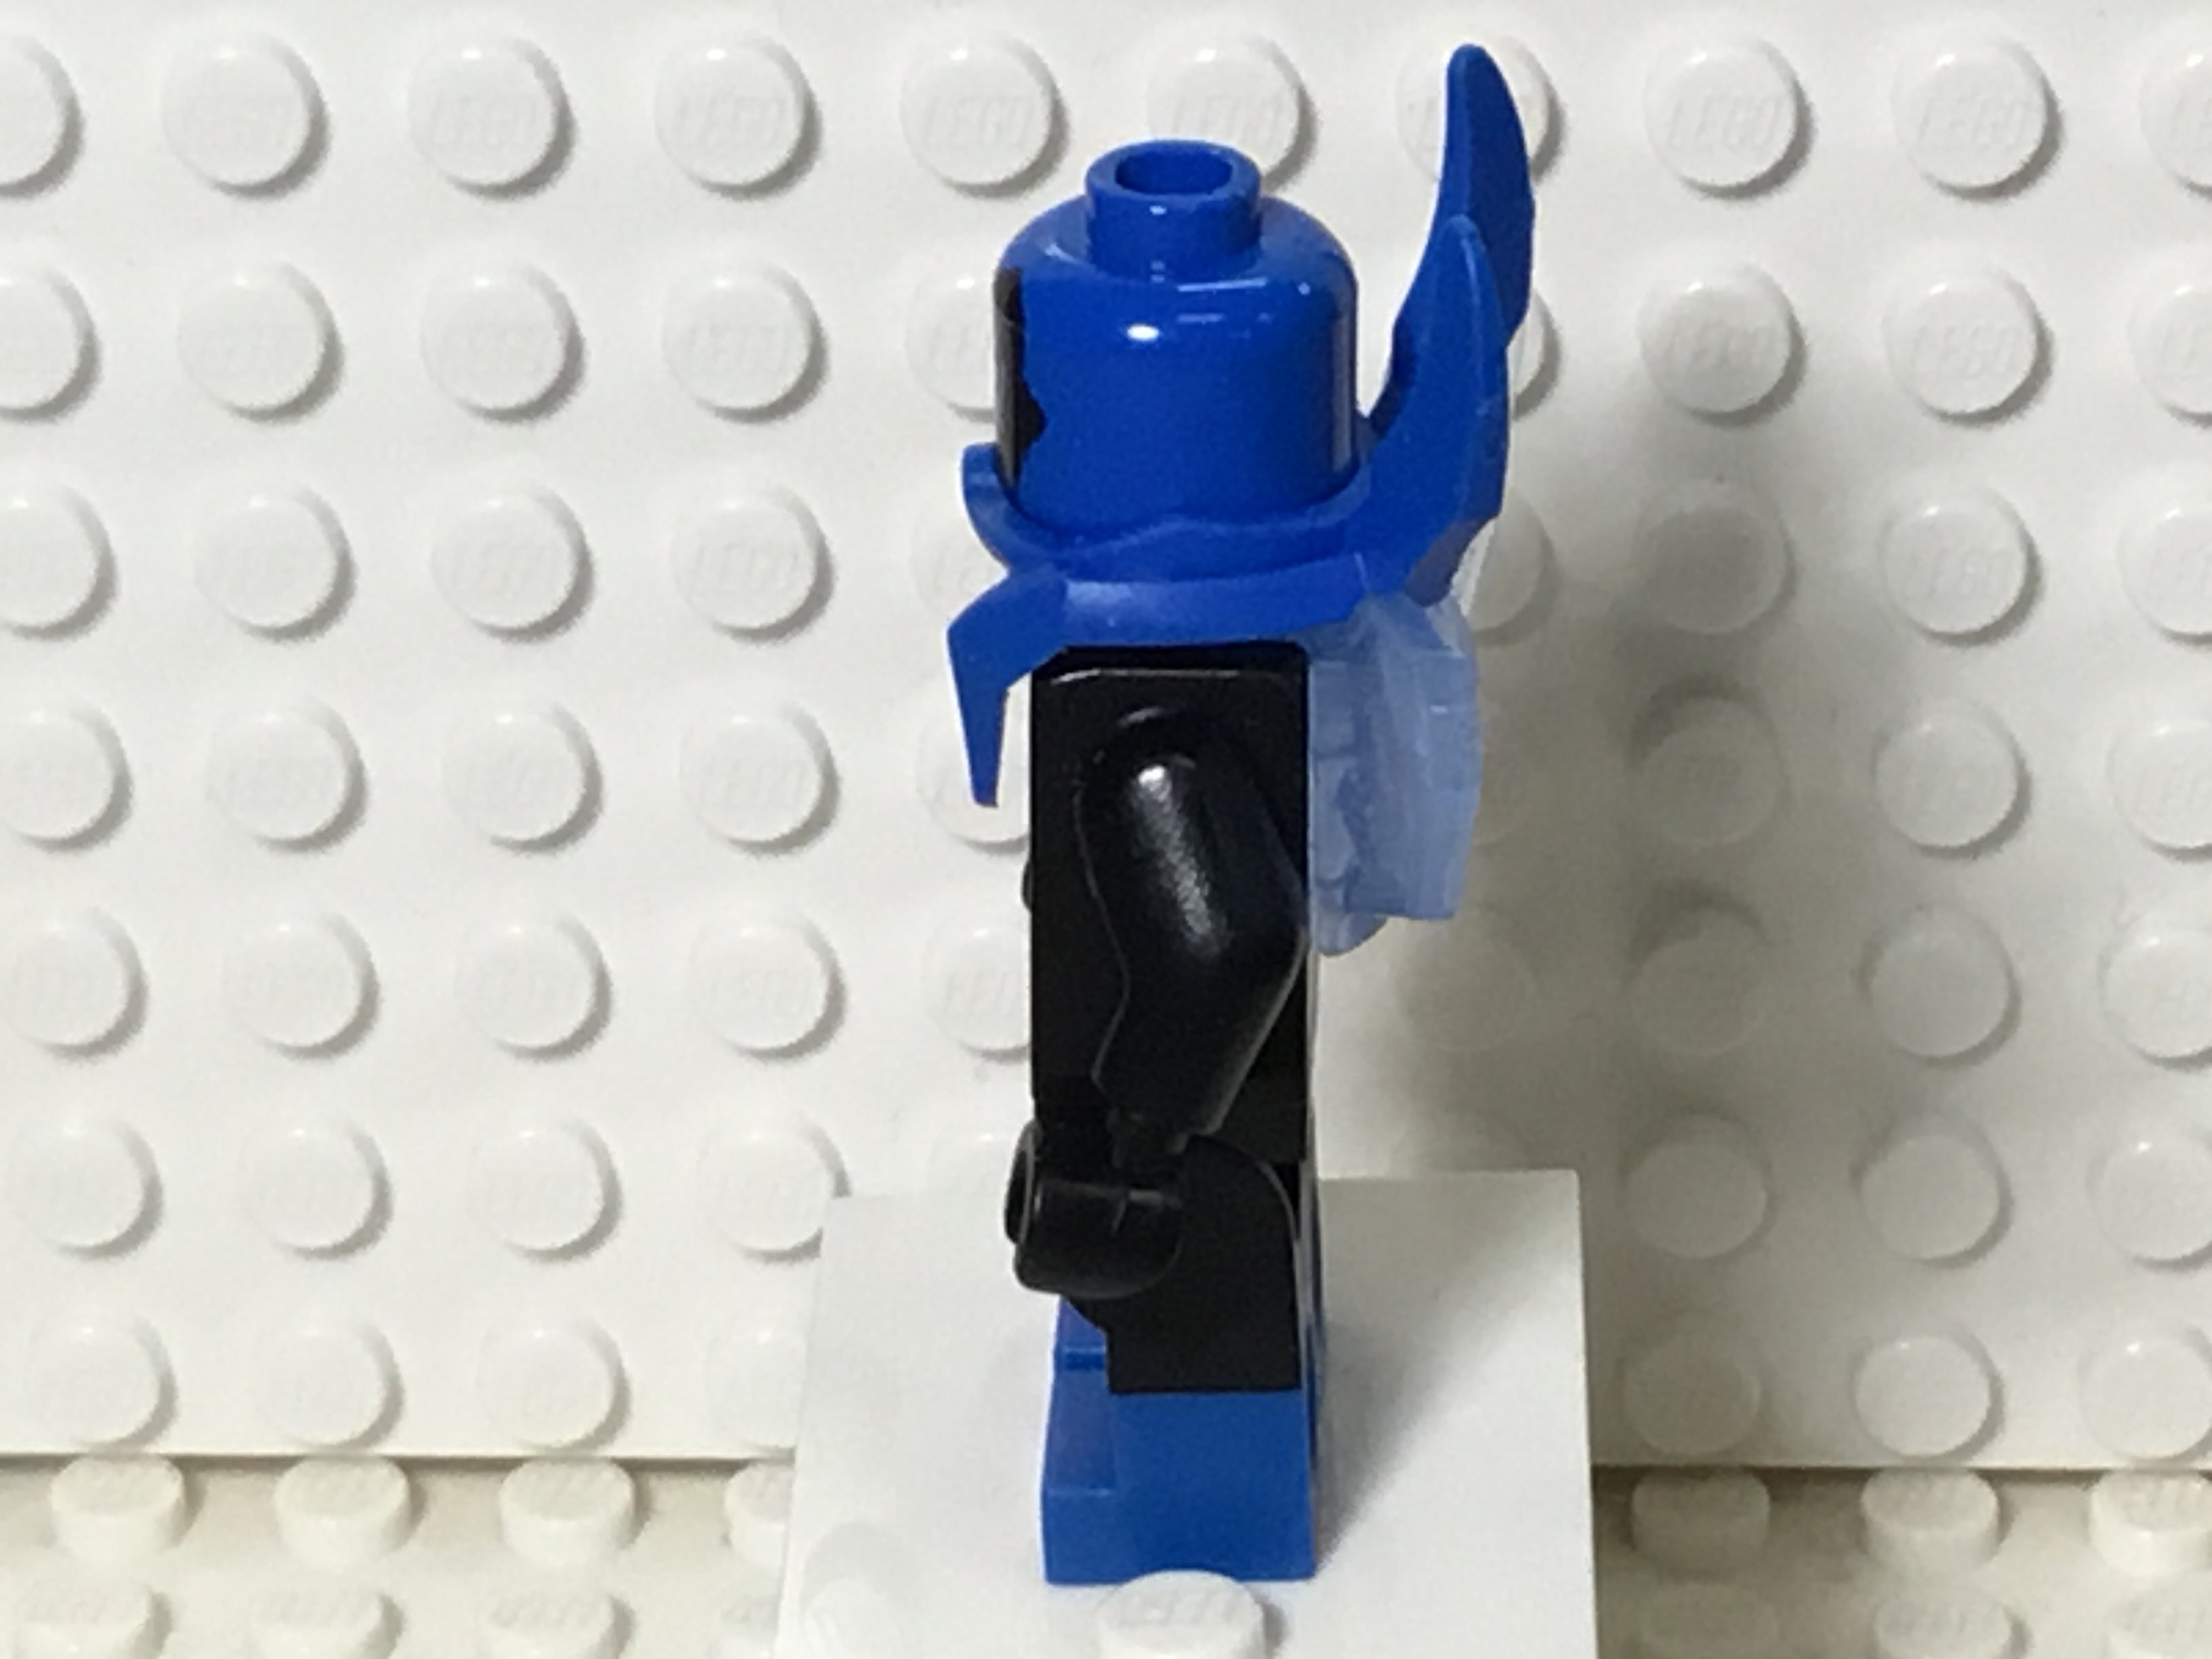 Blue Beetle, sh278 – United Brick Co.